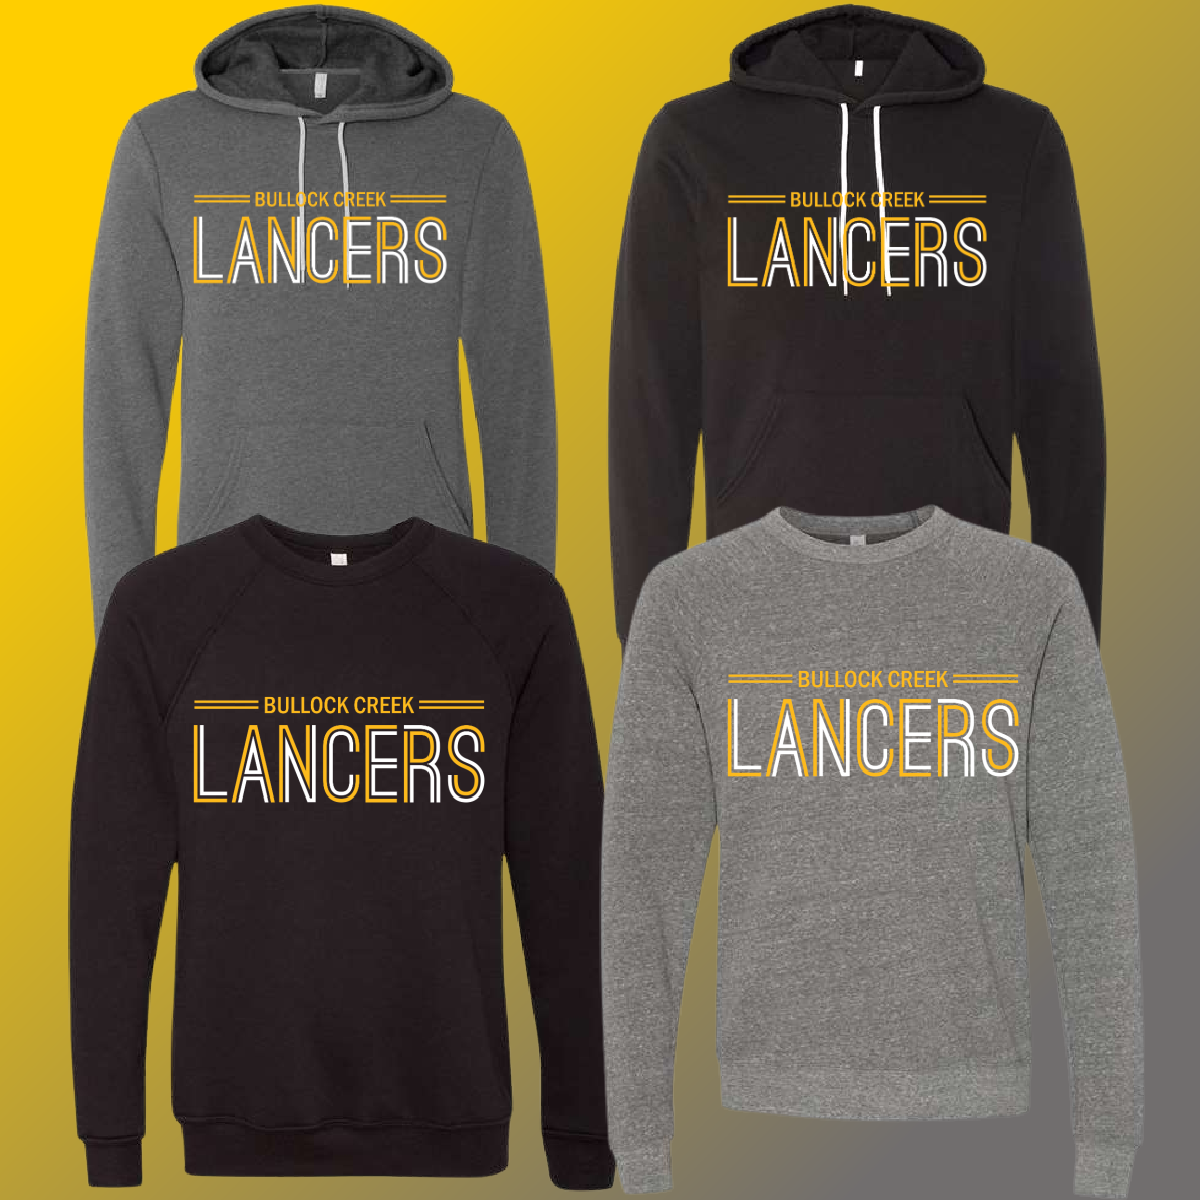 Bullock Creek Lancers - Double Font Premium Sweatshirt